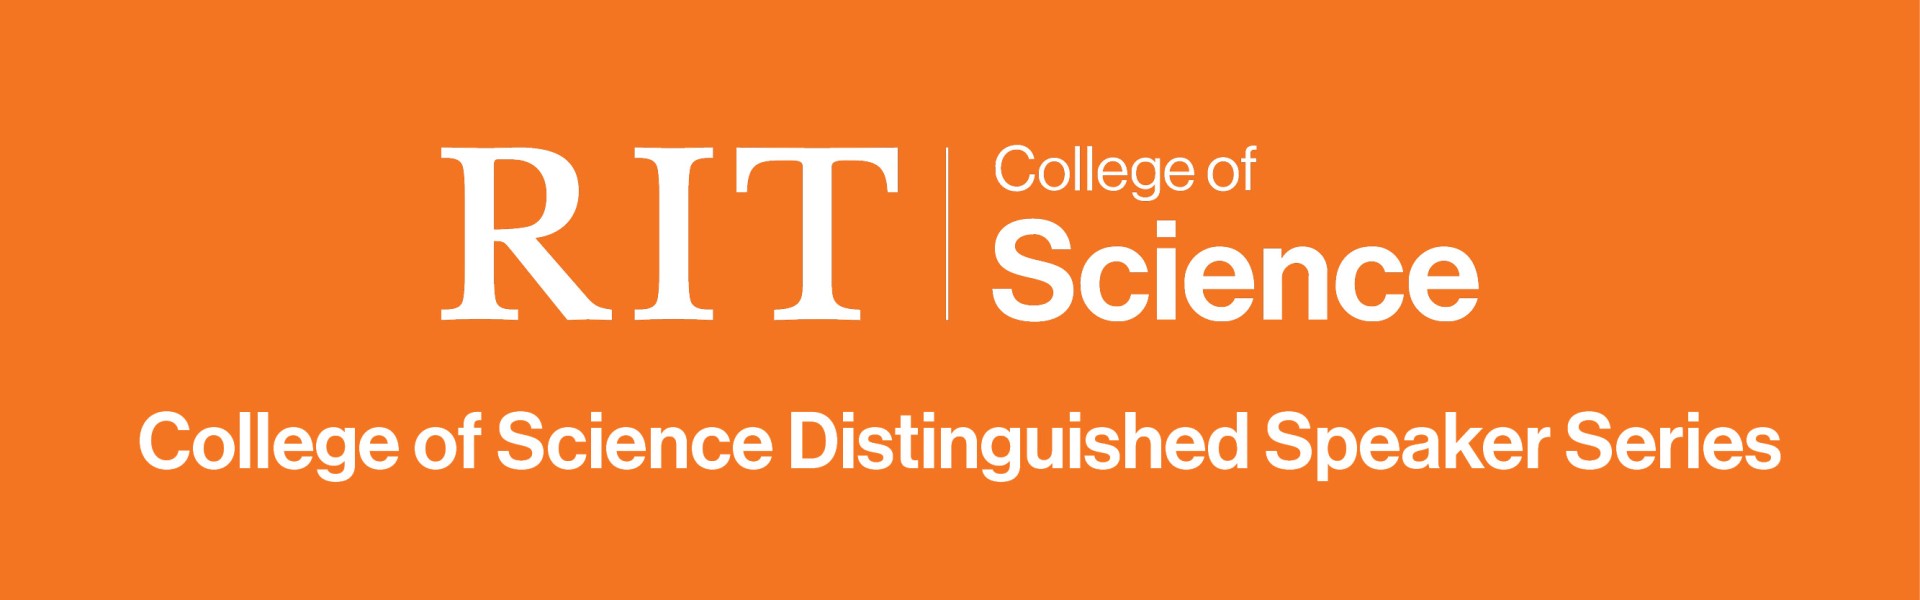 RIT college of science Distinguished Speaker Series